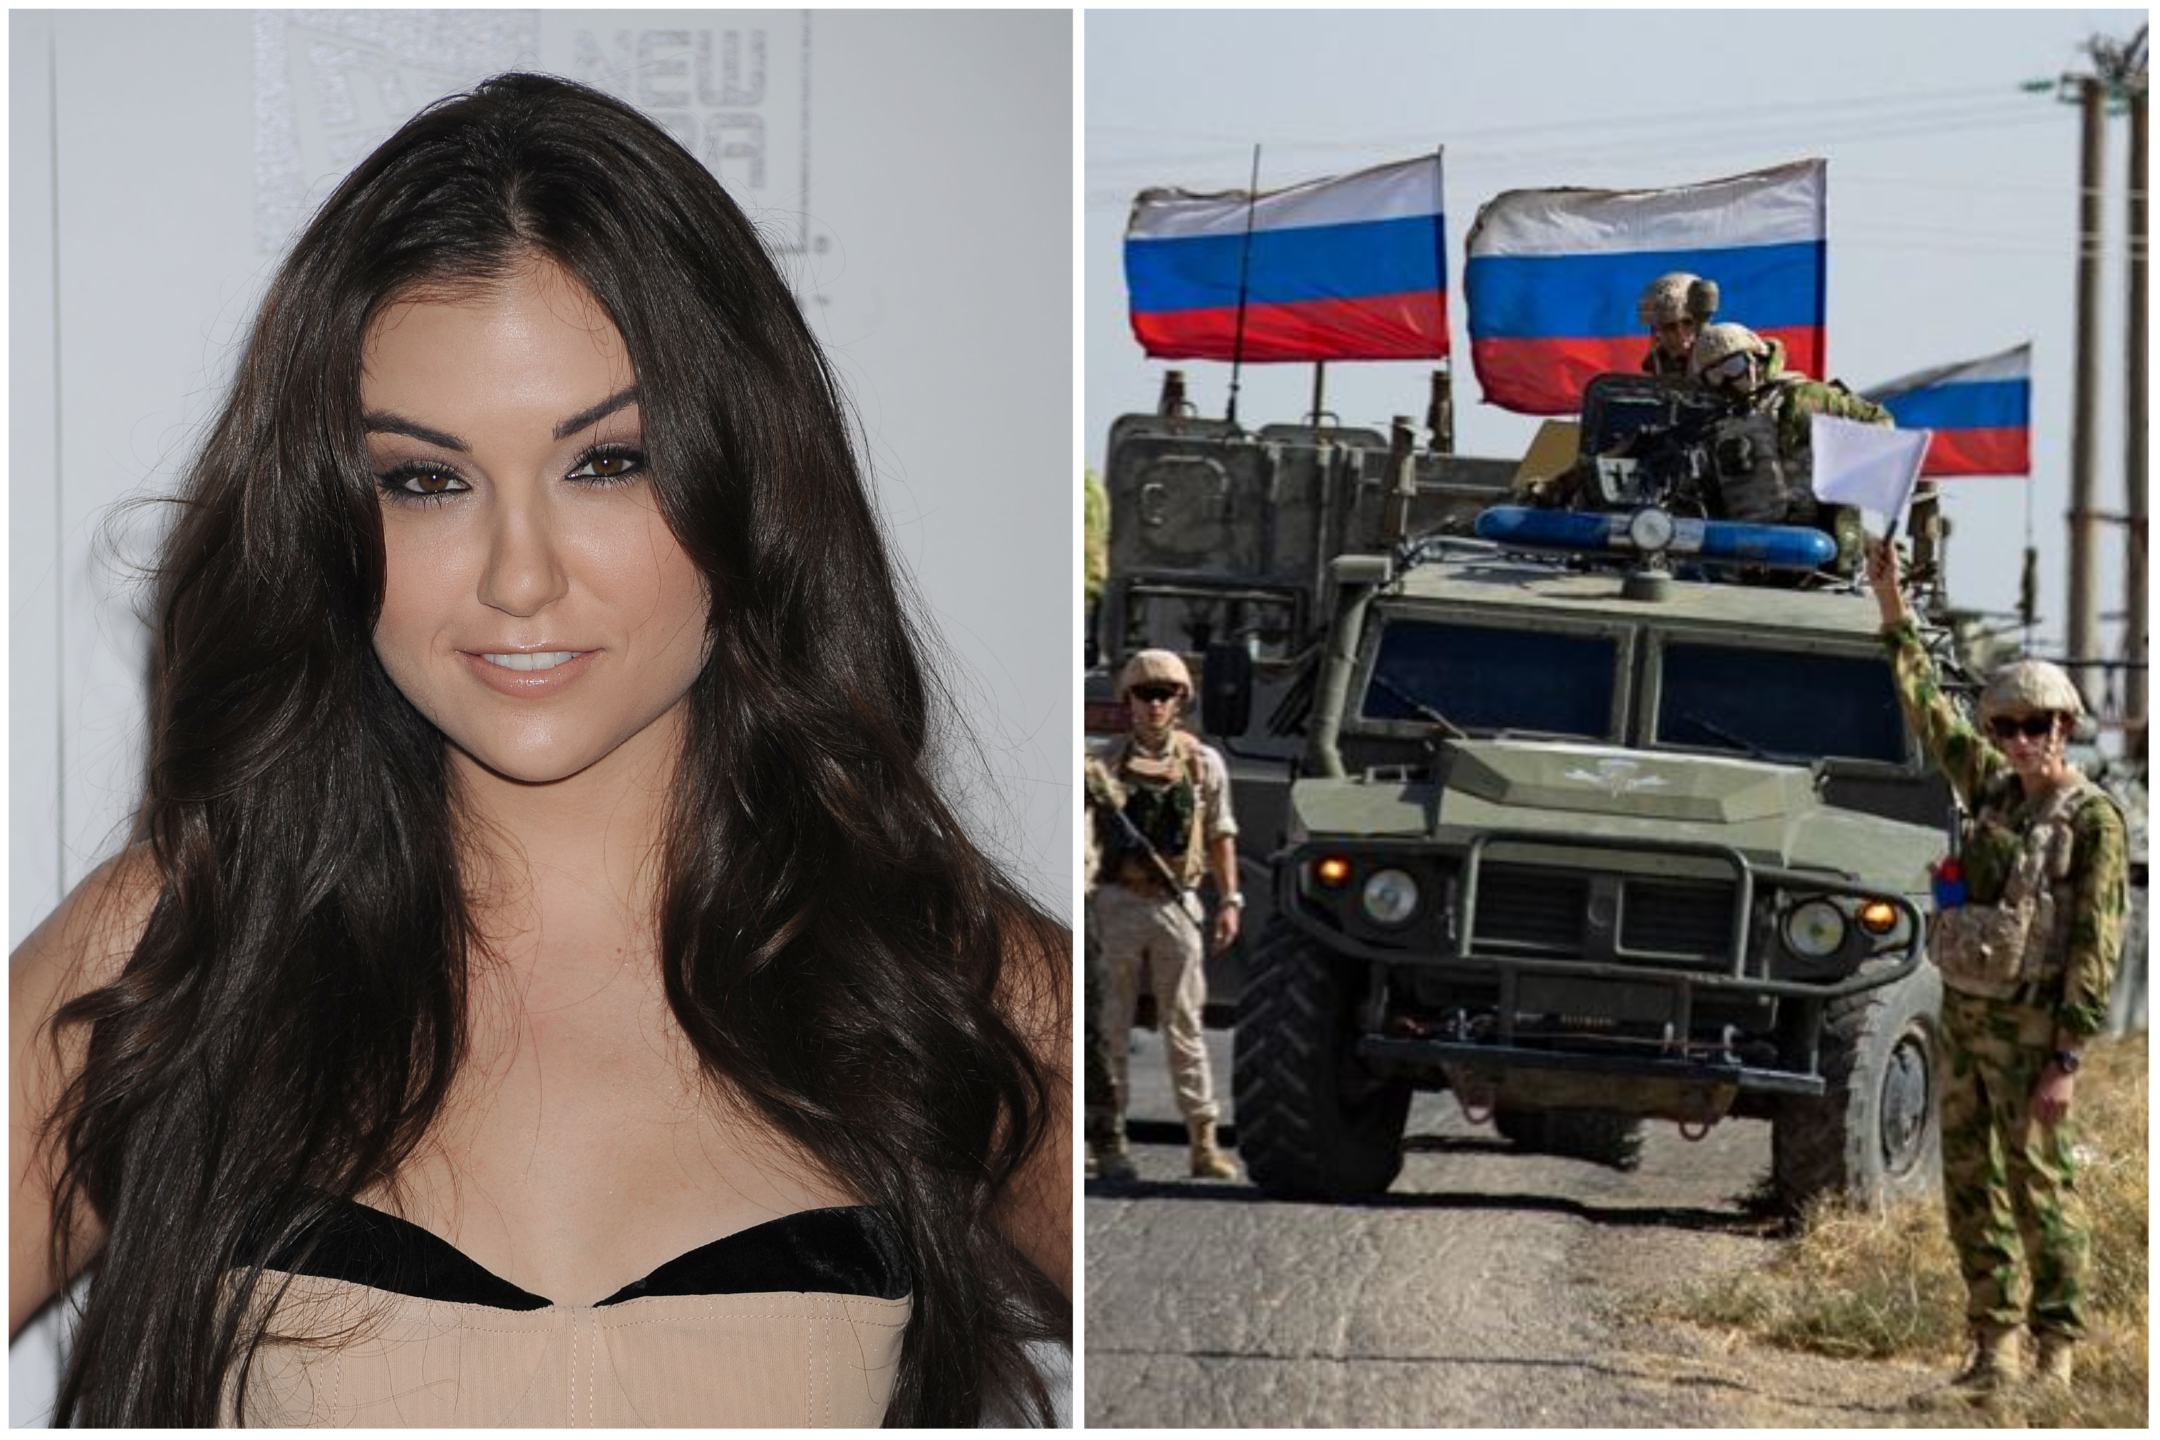 Slavic Porn Hammer - Fact Check: Was Ex-Adult Film Star Sasha Grey in Russian Military Promo?